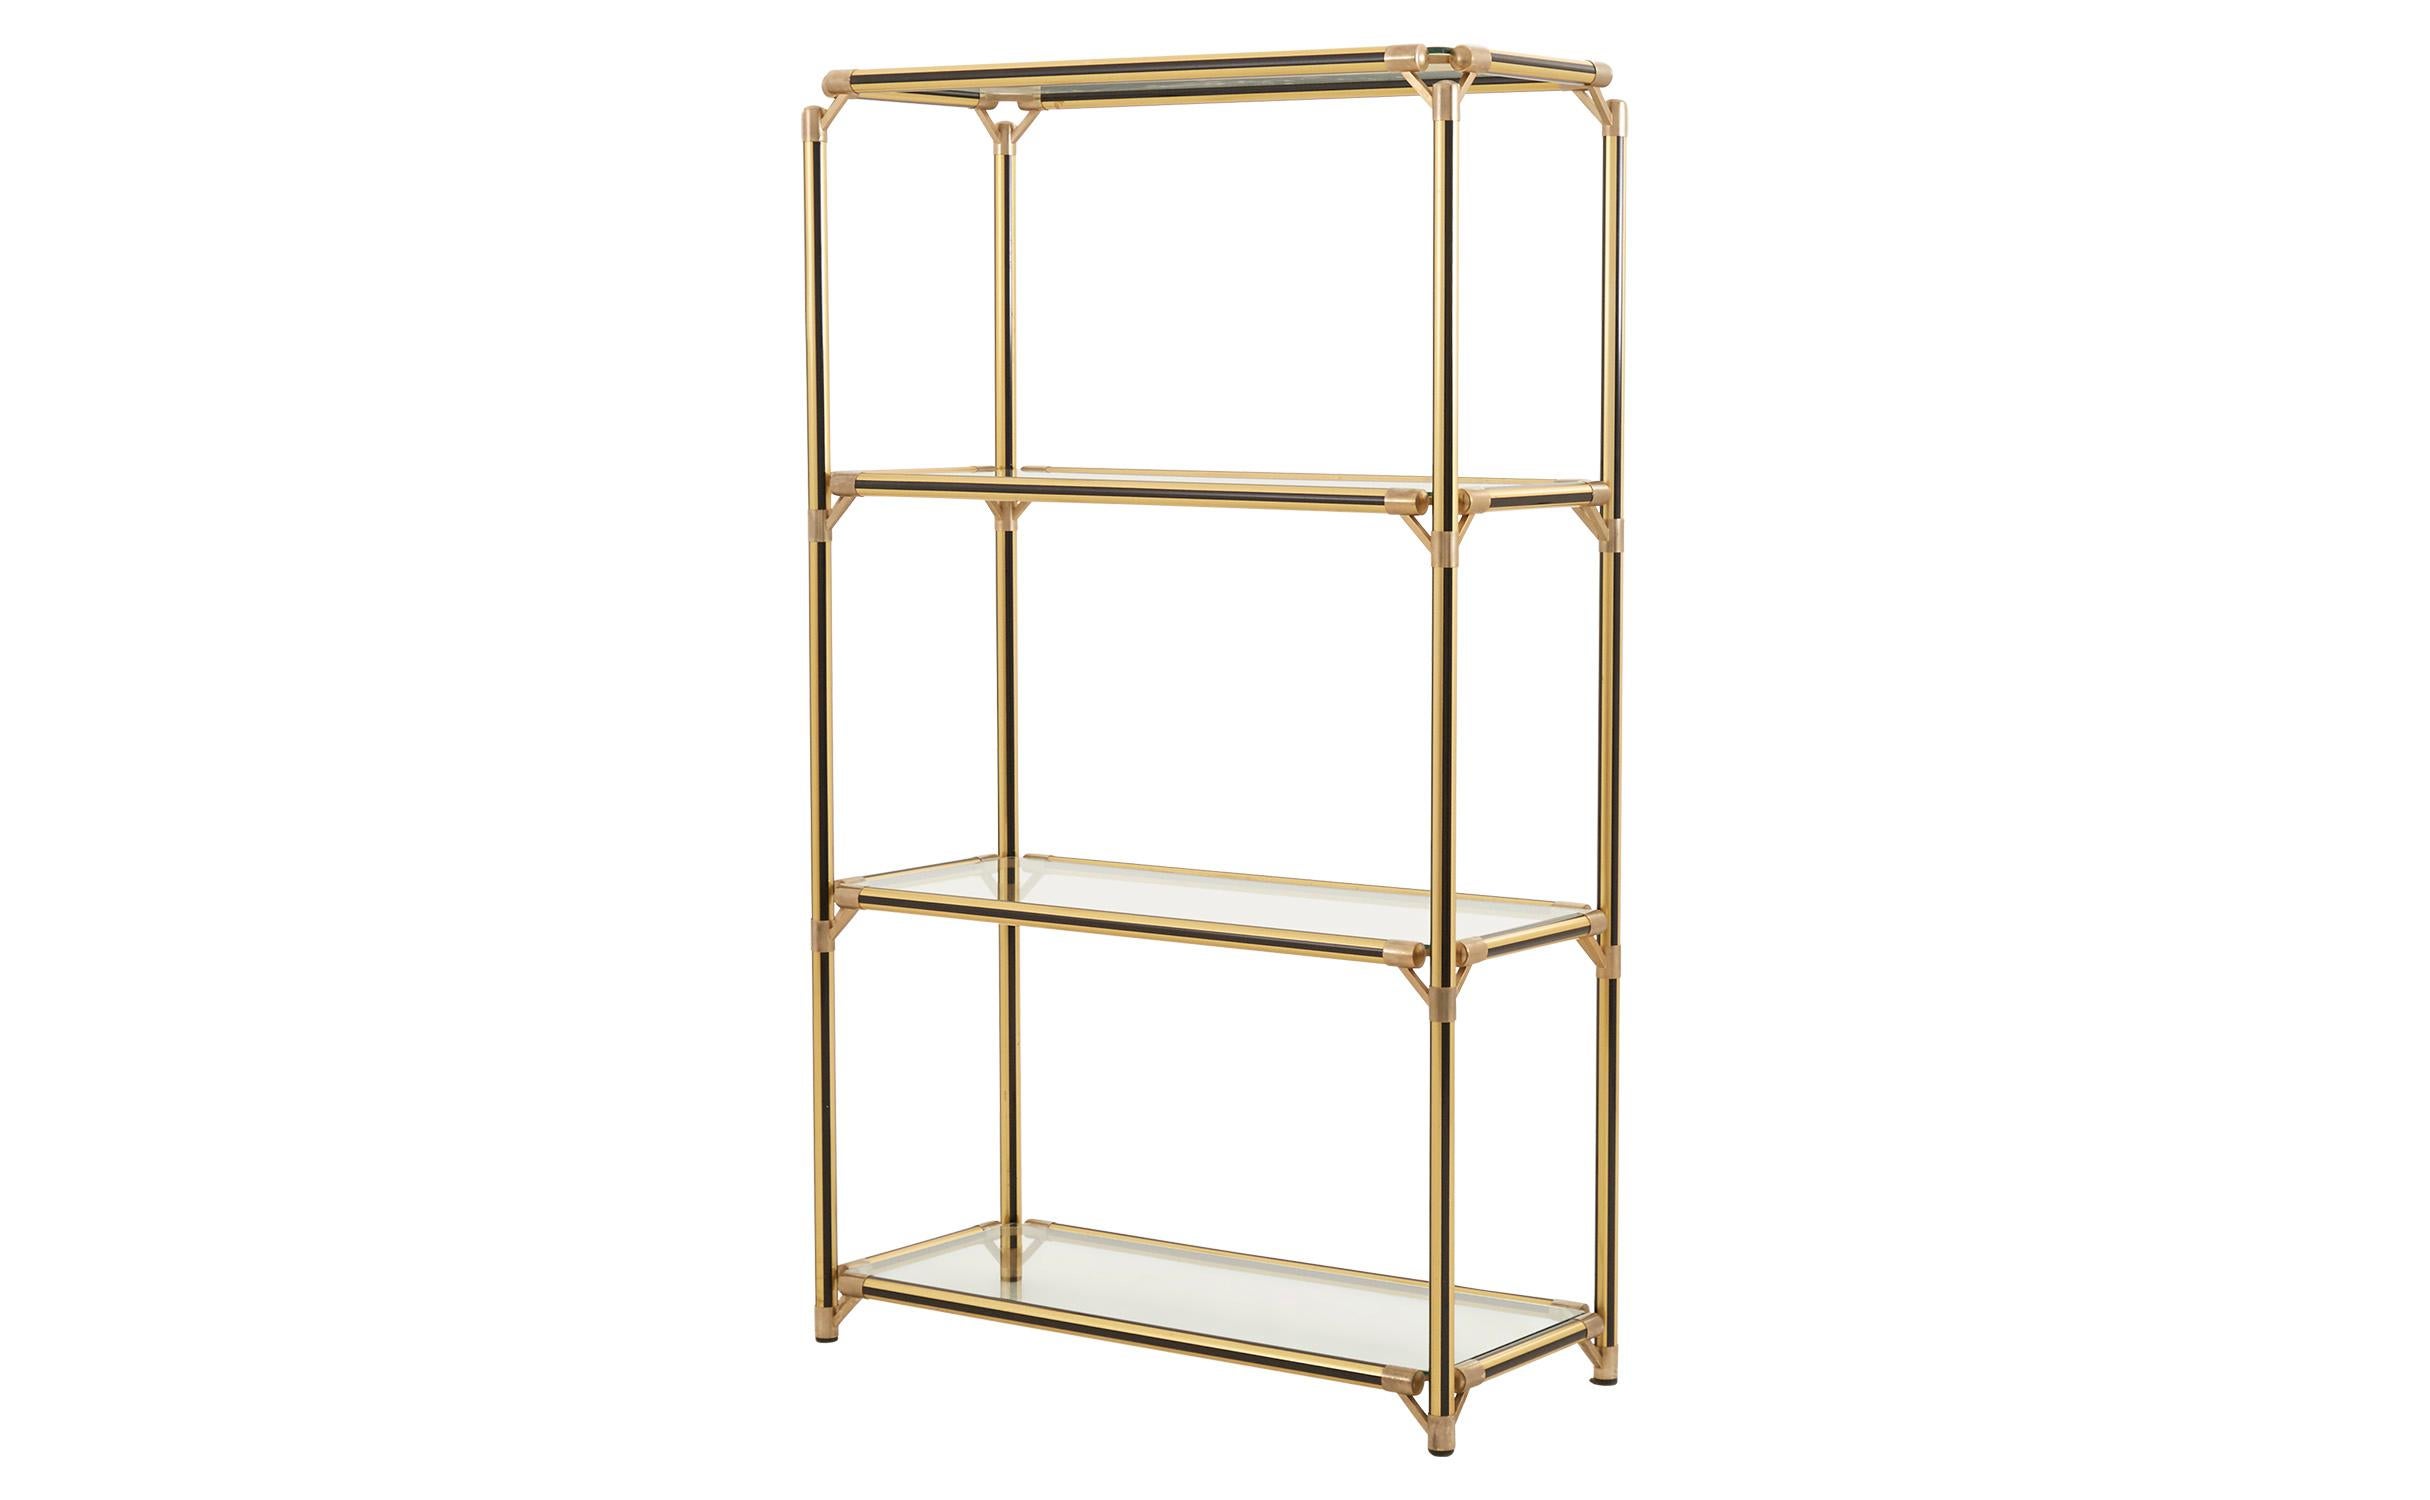 • Black and gold metal frame
• Brass details
• Original glass shelves
• 20th century
• France
• Measures: 38